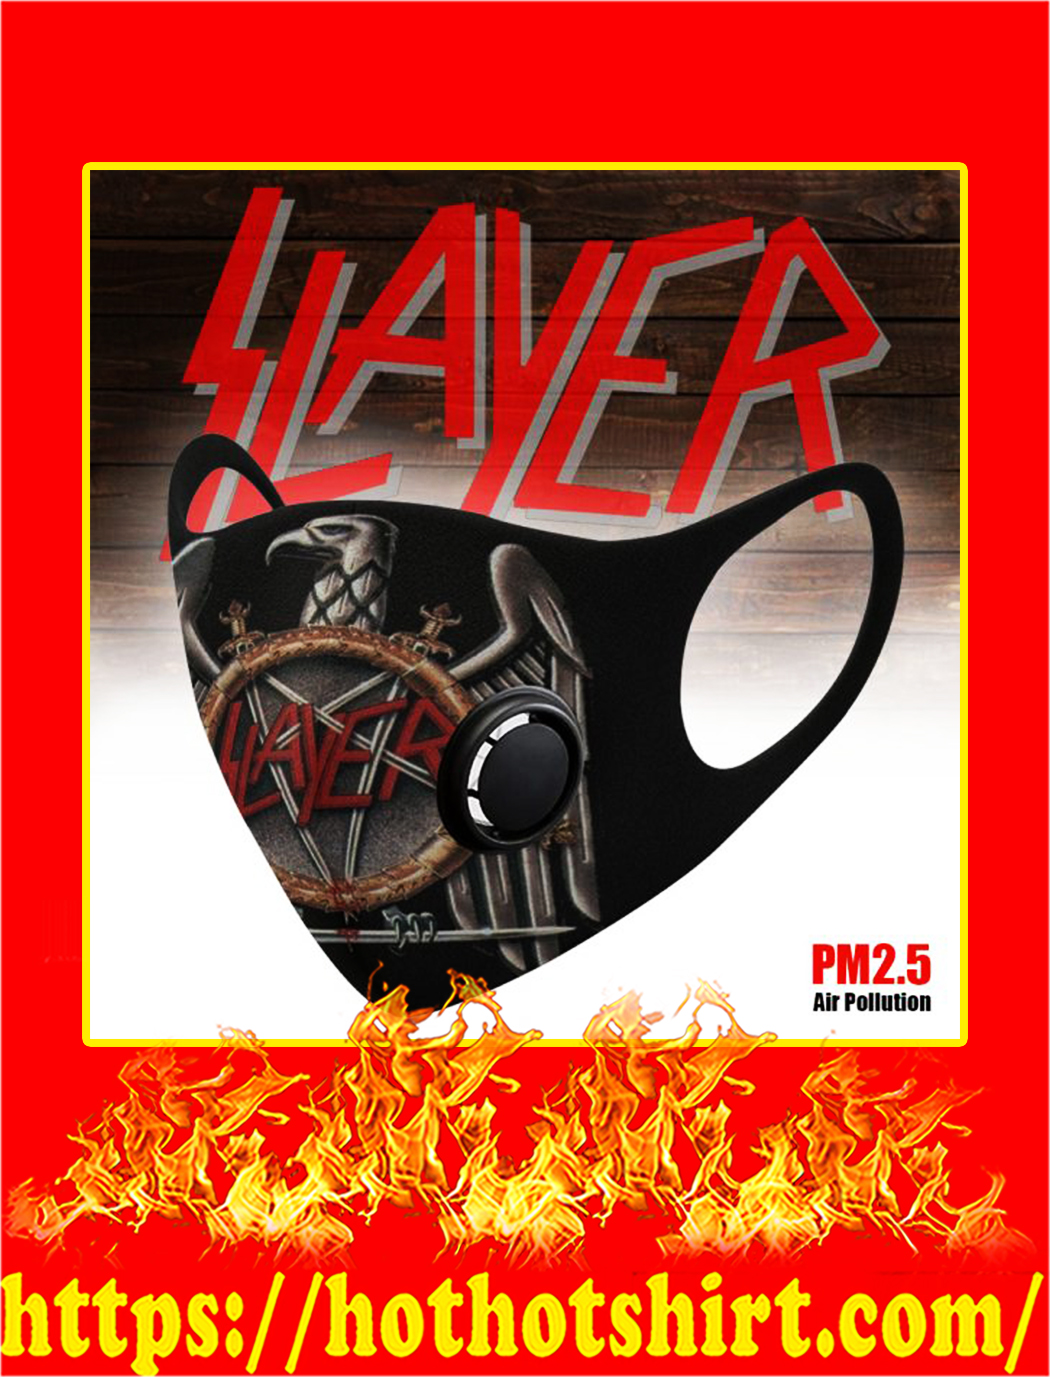 Slayer band filter face mask